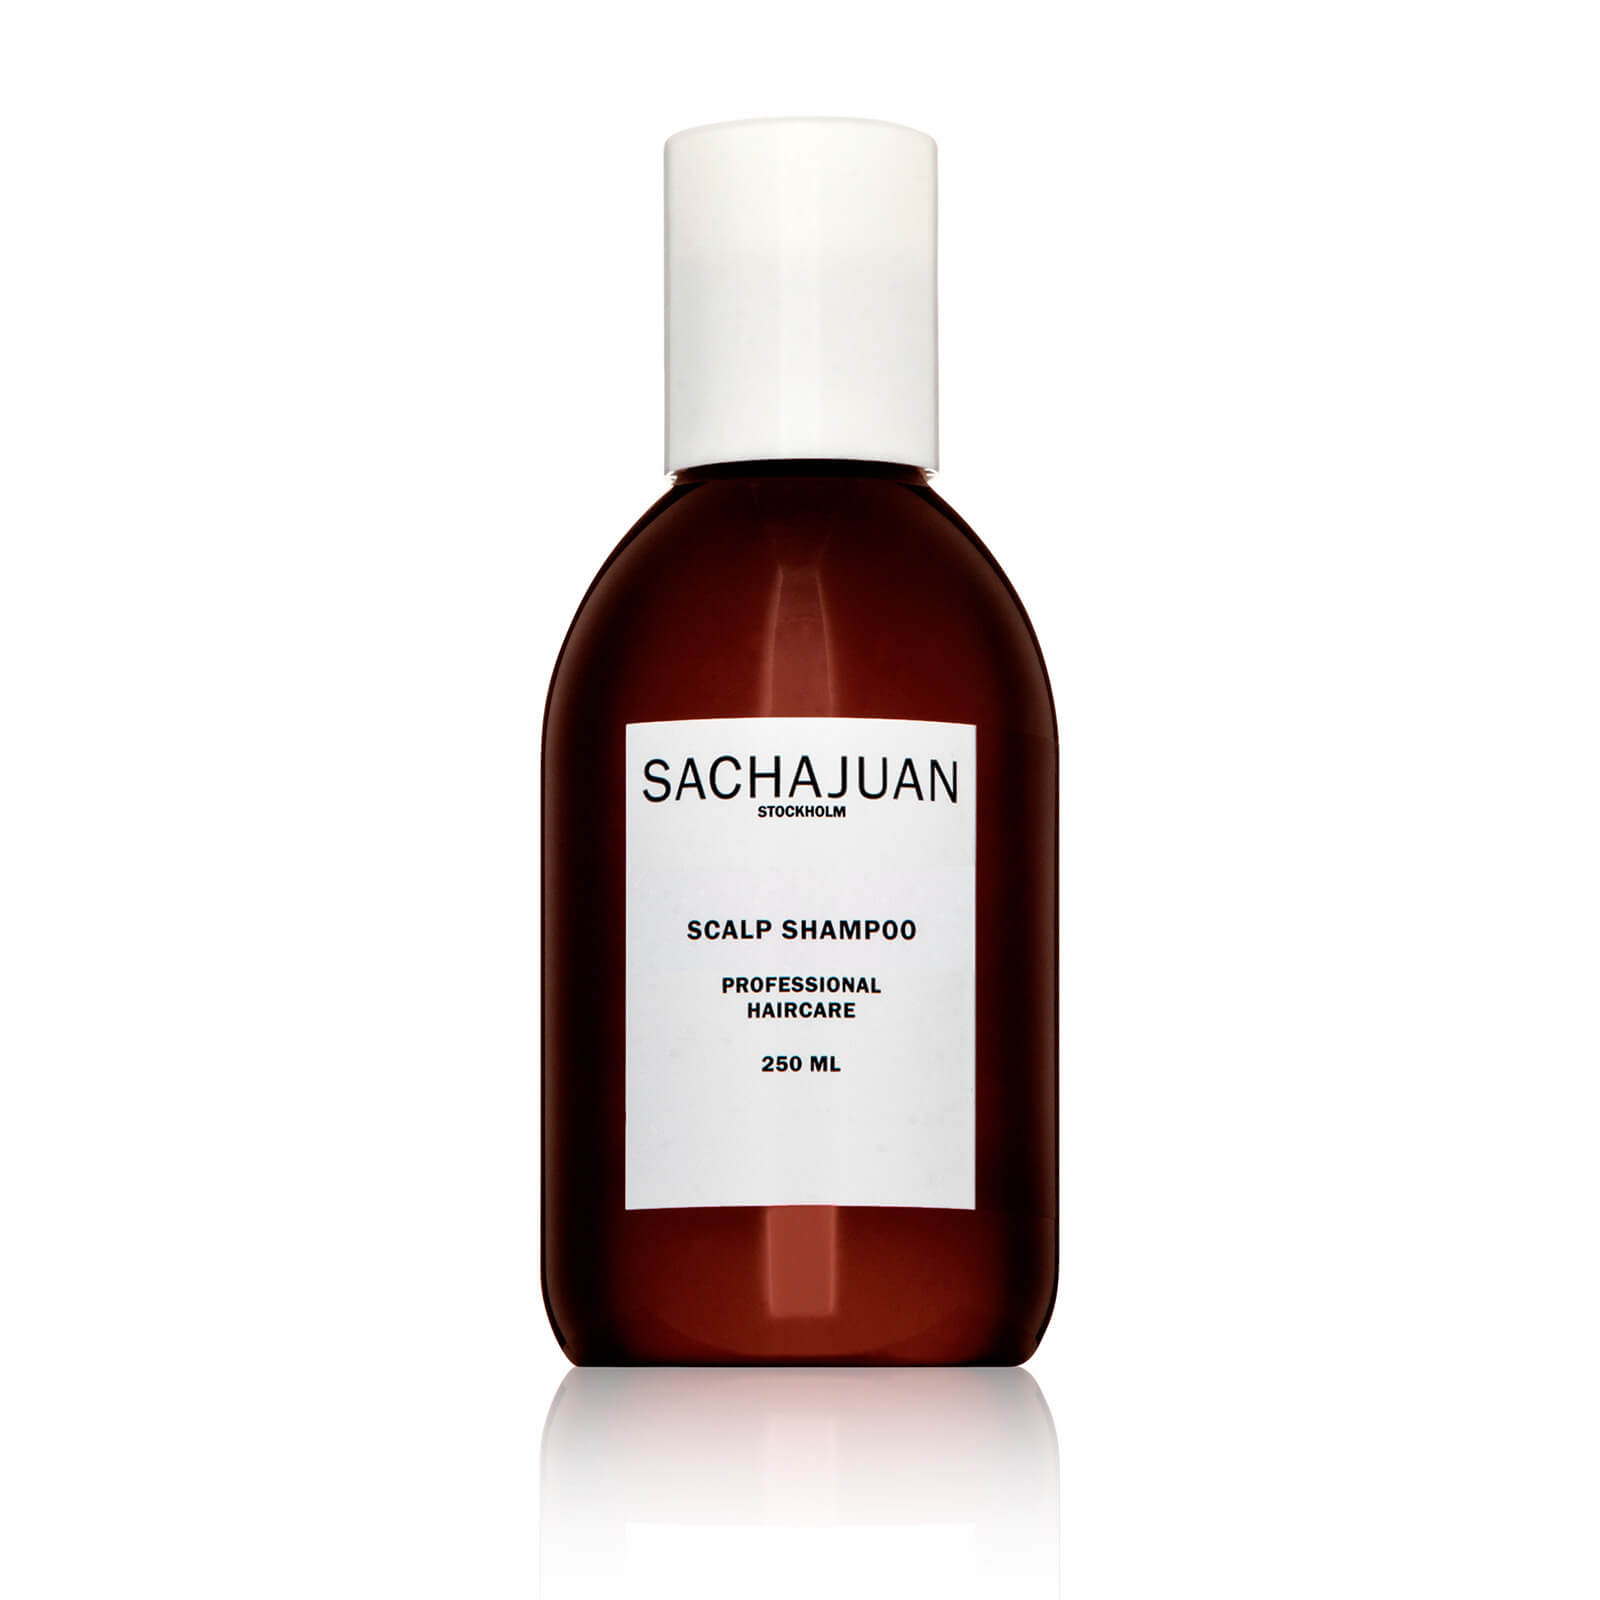 Sachajuan Scalp Shampoo, 250ml - One Size In Colorless